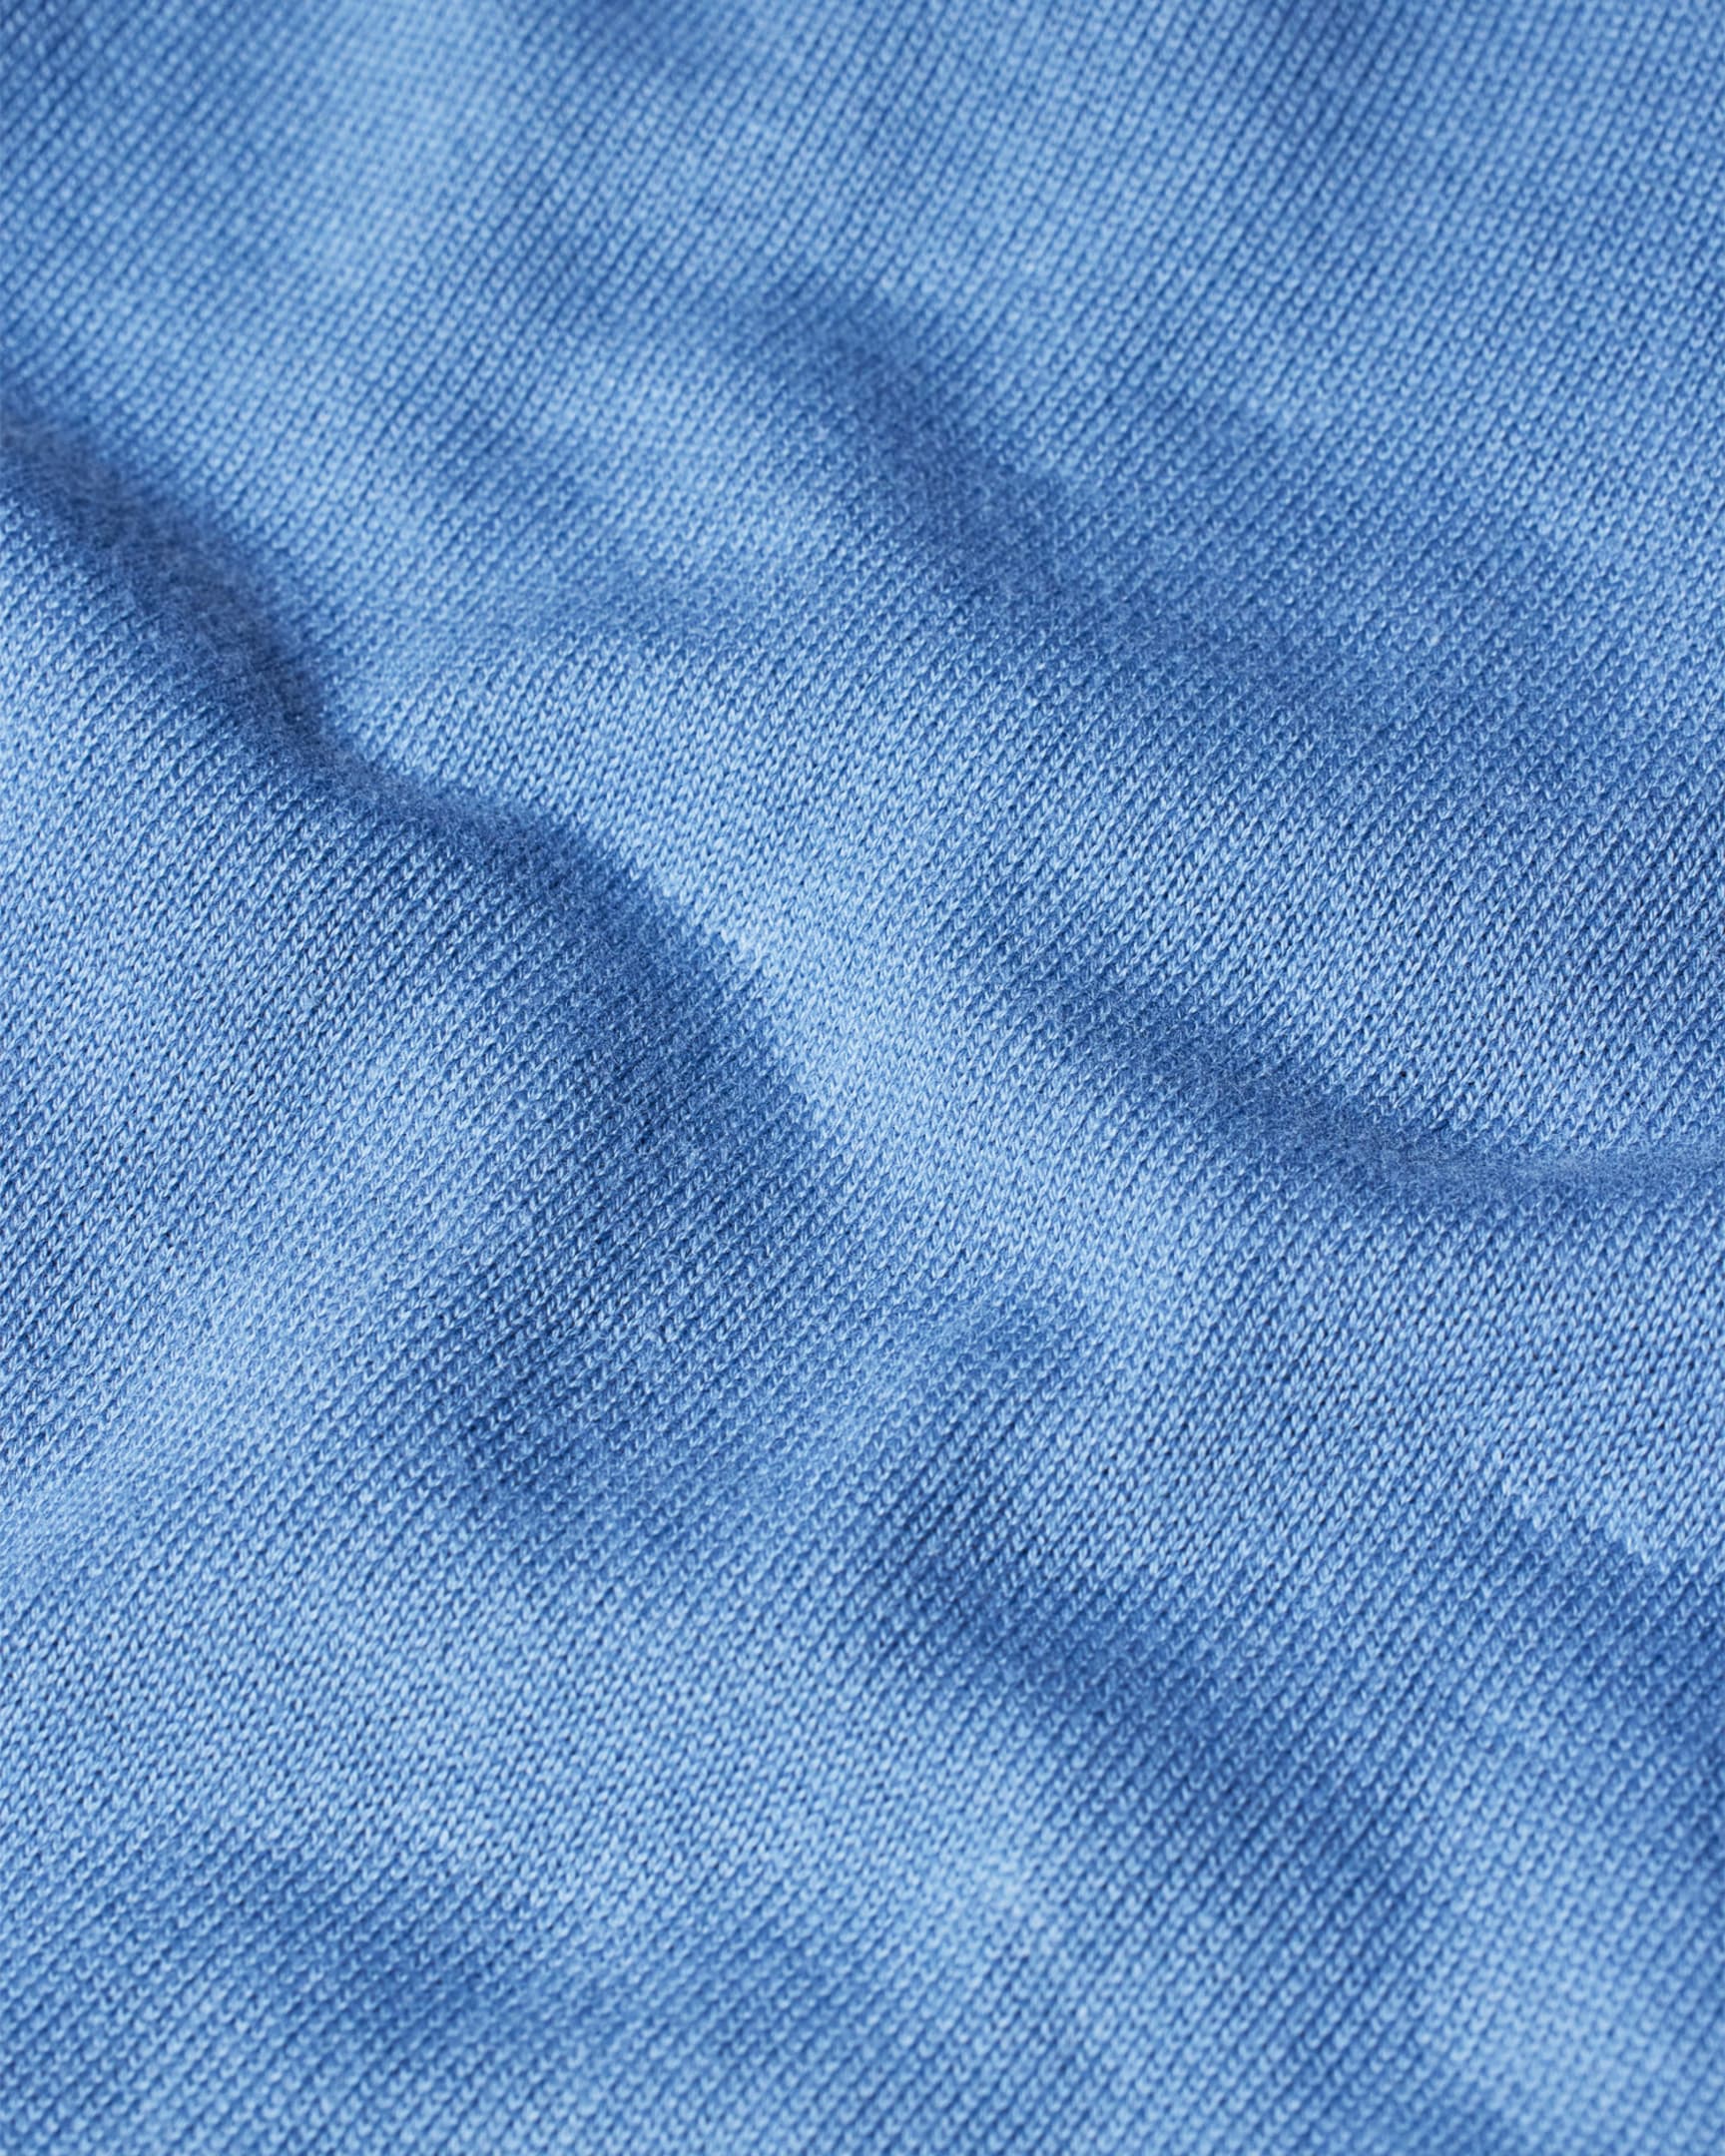 Detail View - Light Blue Cotton Zebra Logo Sweater Paul Smith